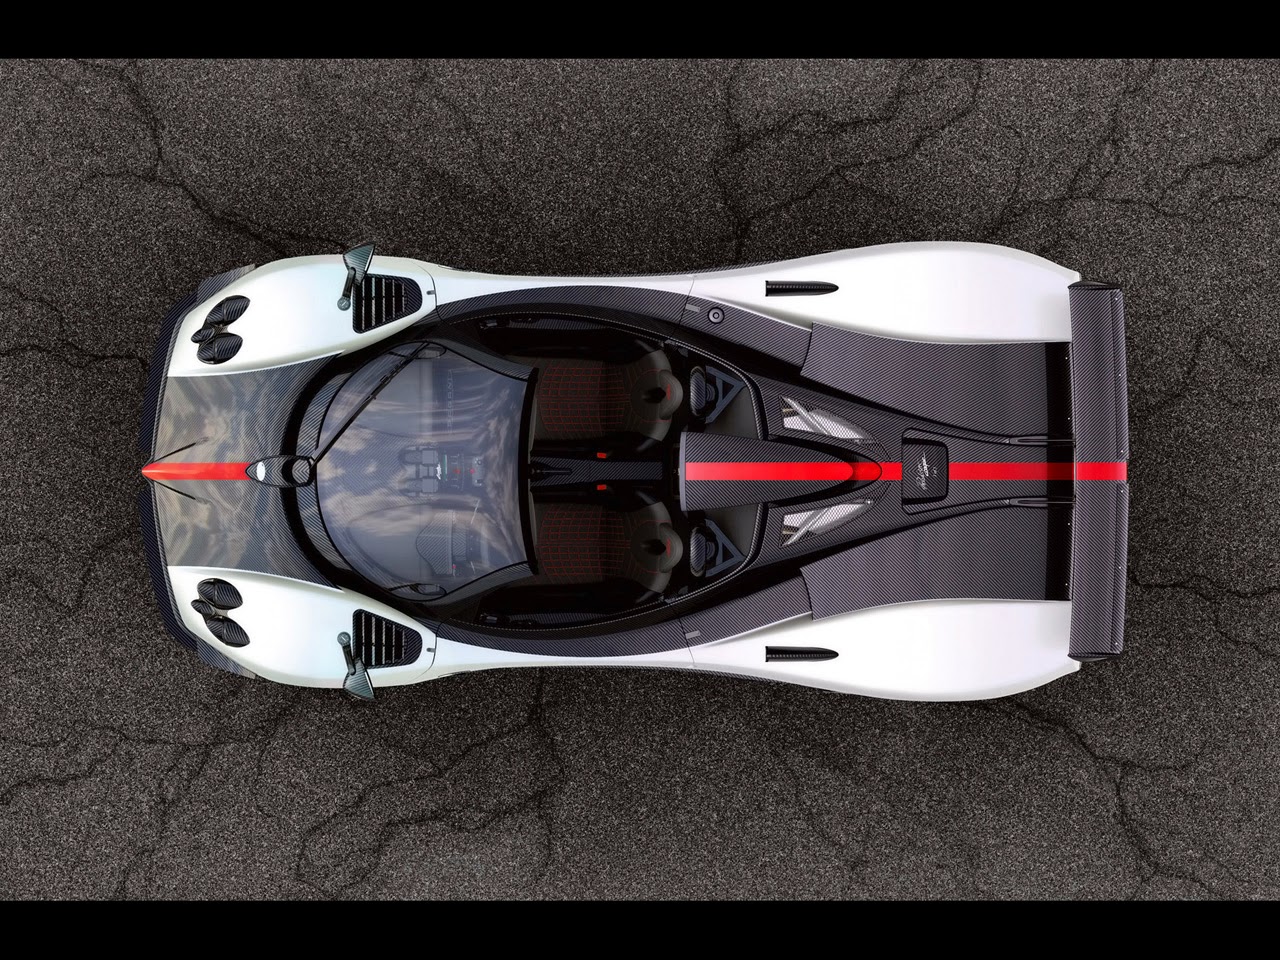 Pagani Zonda Cinque Roadster صور سيارات: باجاني زوندا سينك رودستر 